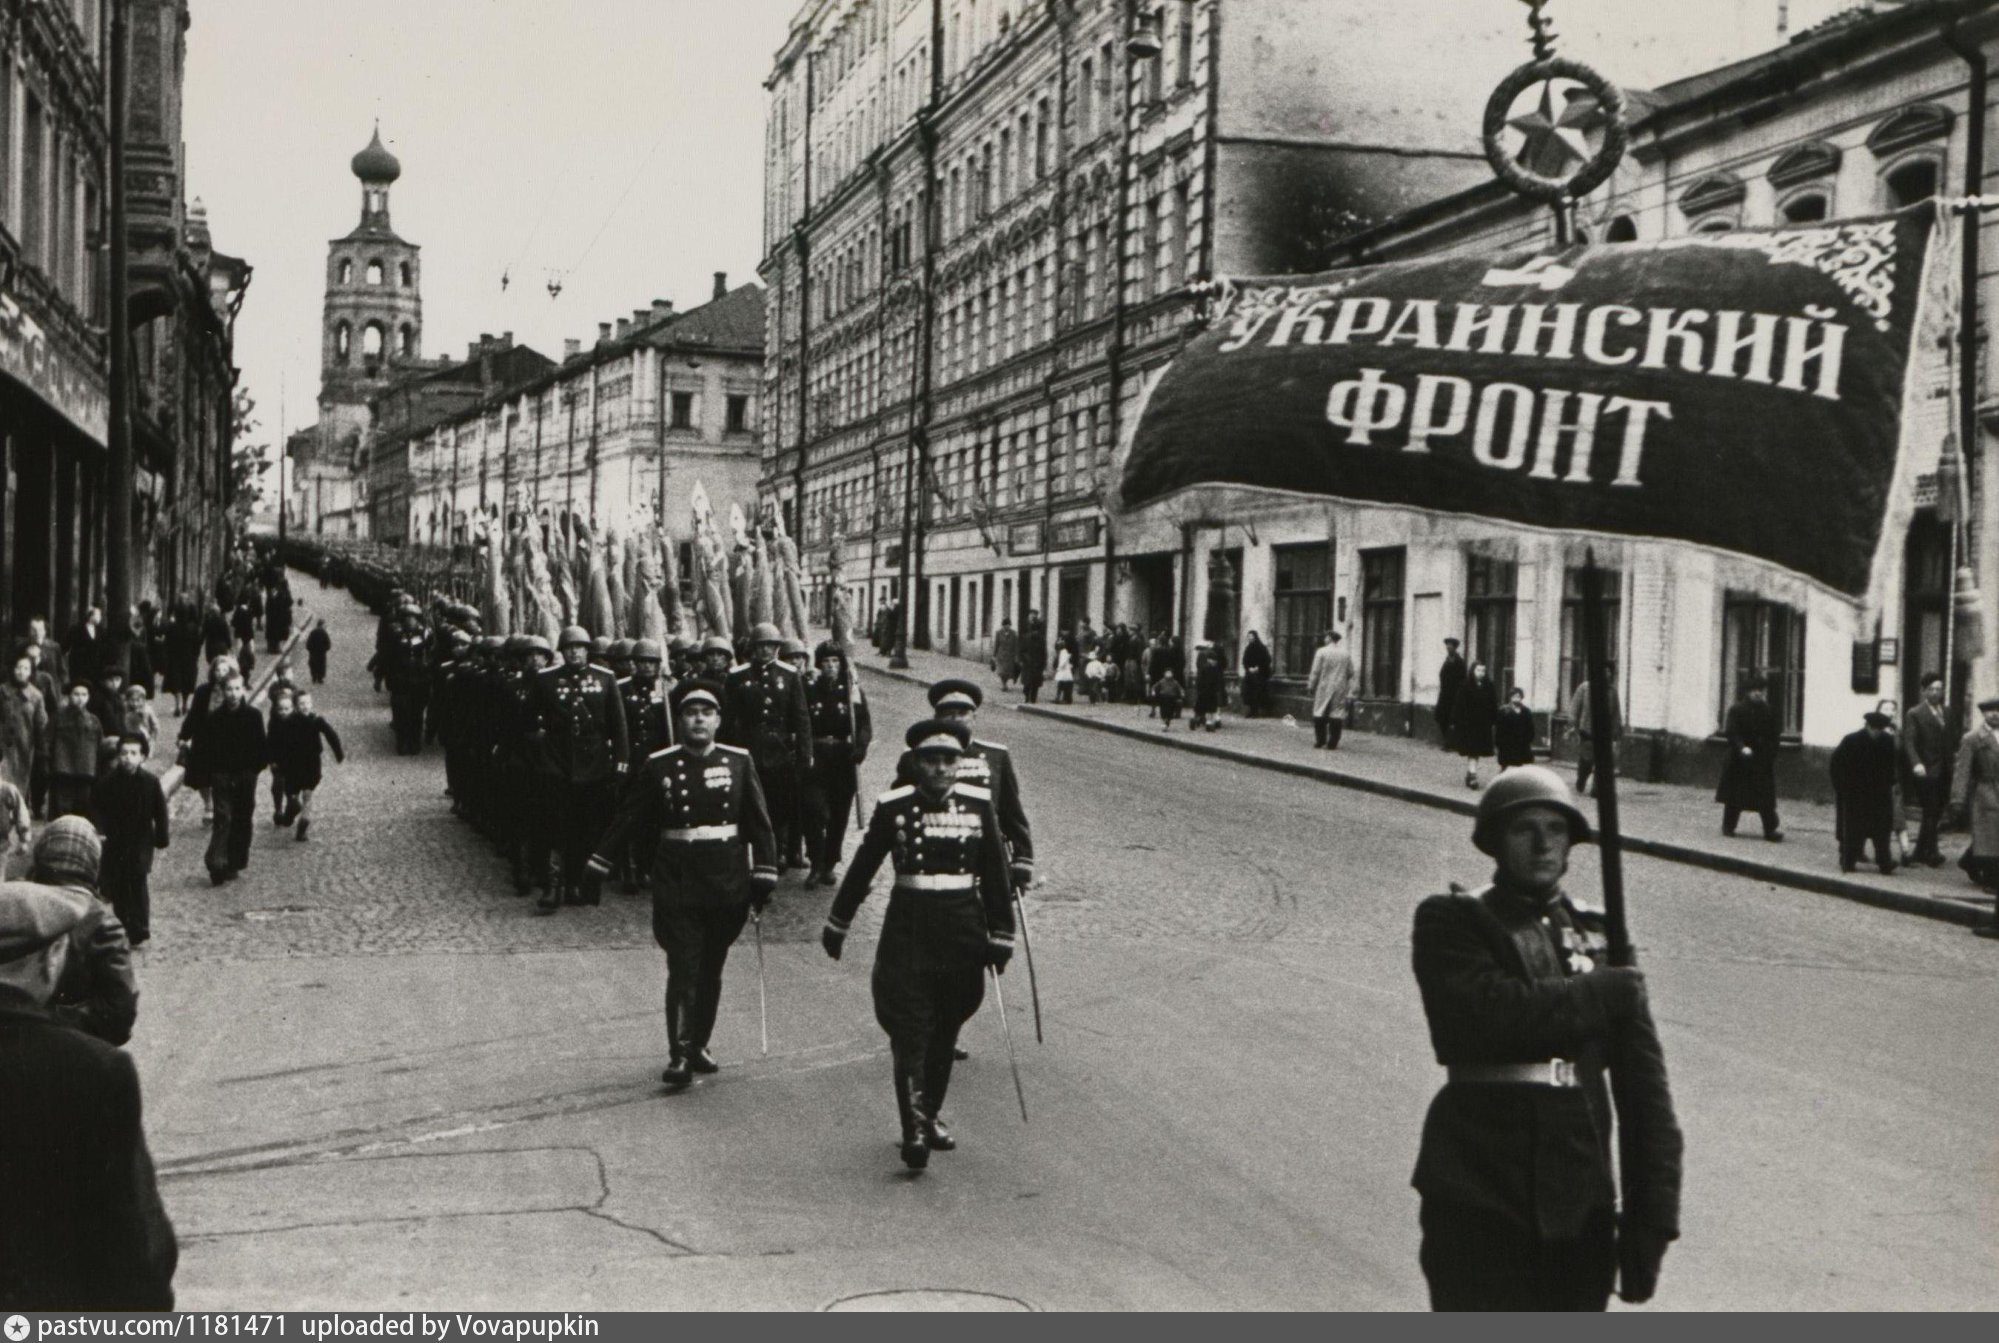 9 мая улица победы. Брежнев на параде Победы 1945. Фото Брежнева на параде Победы 1945 года.